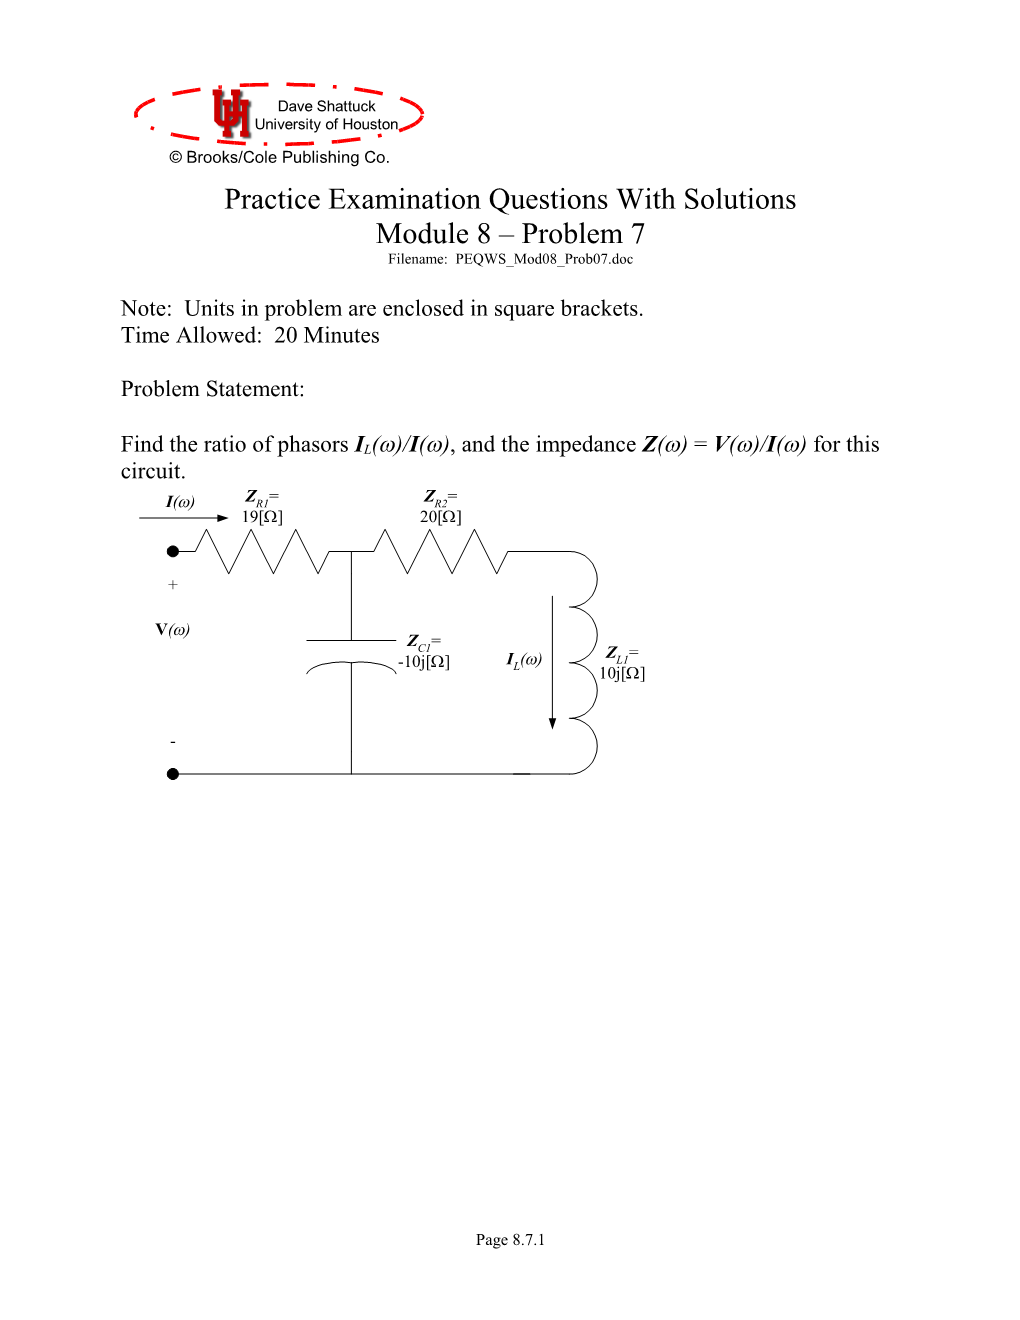 Practice Examination Module 8 Problem 7